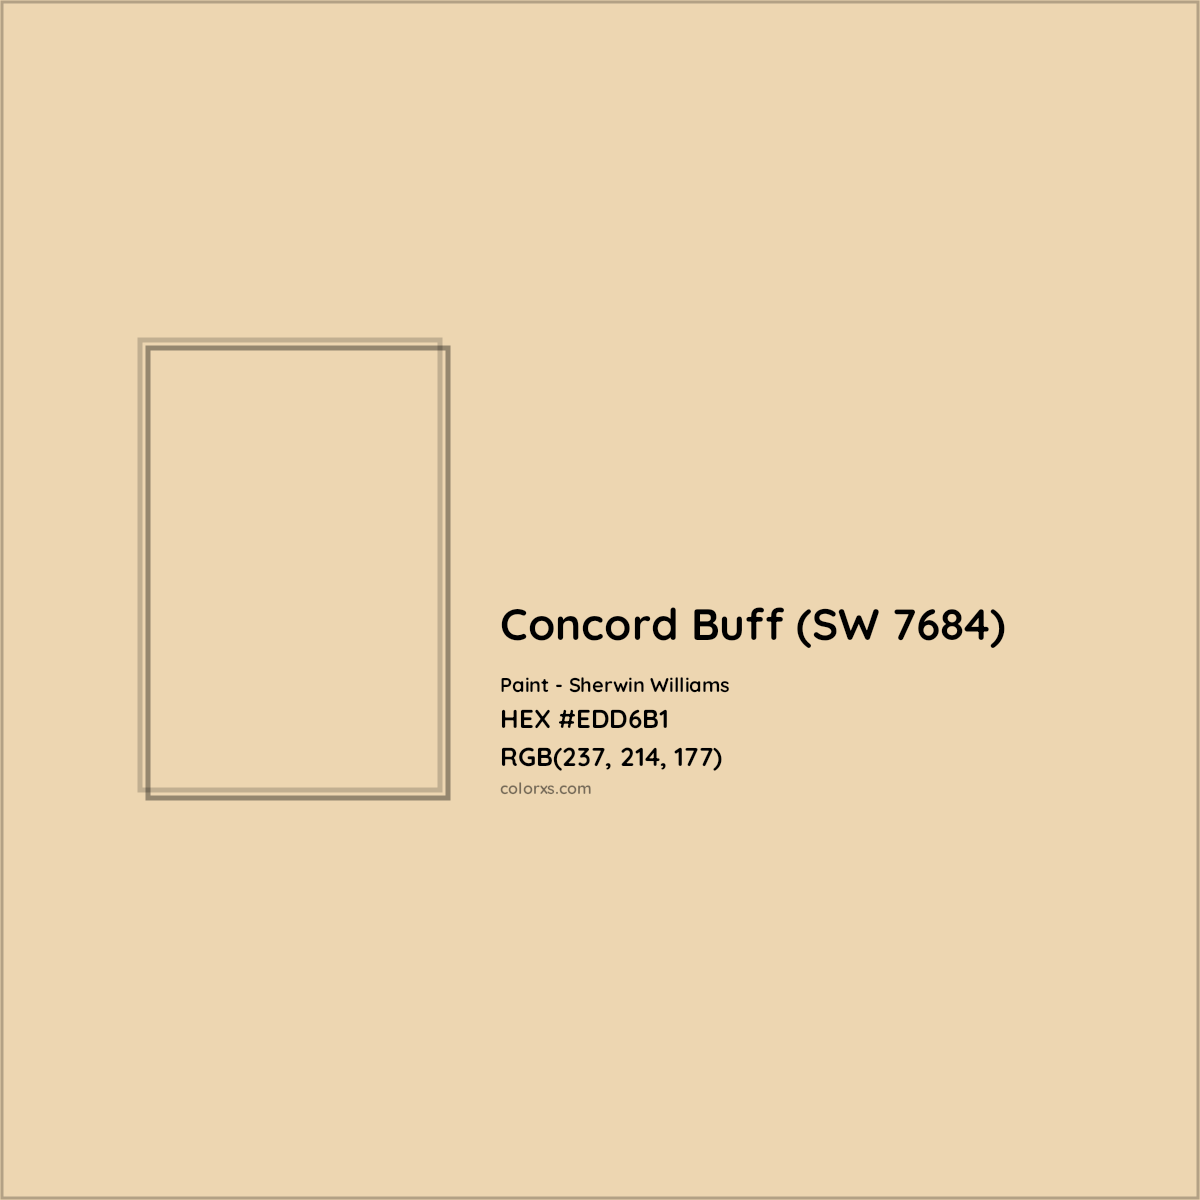 HEX #EDD6B1 Concord Buff (SW 7684) Paint Sherwin Williams - Color Code